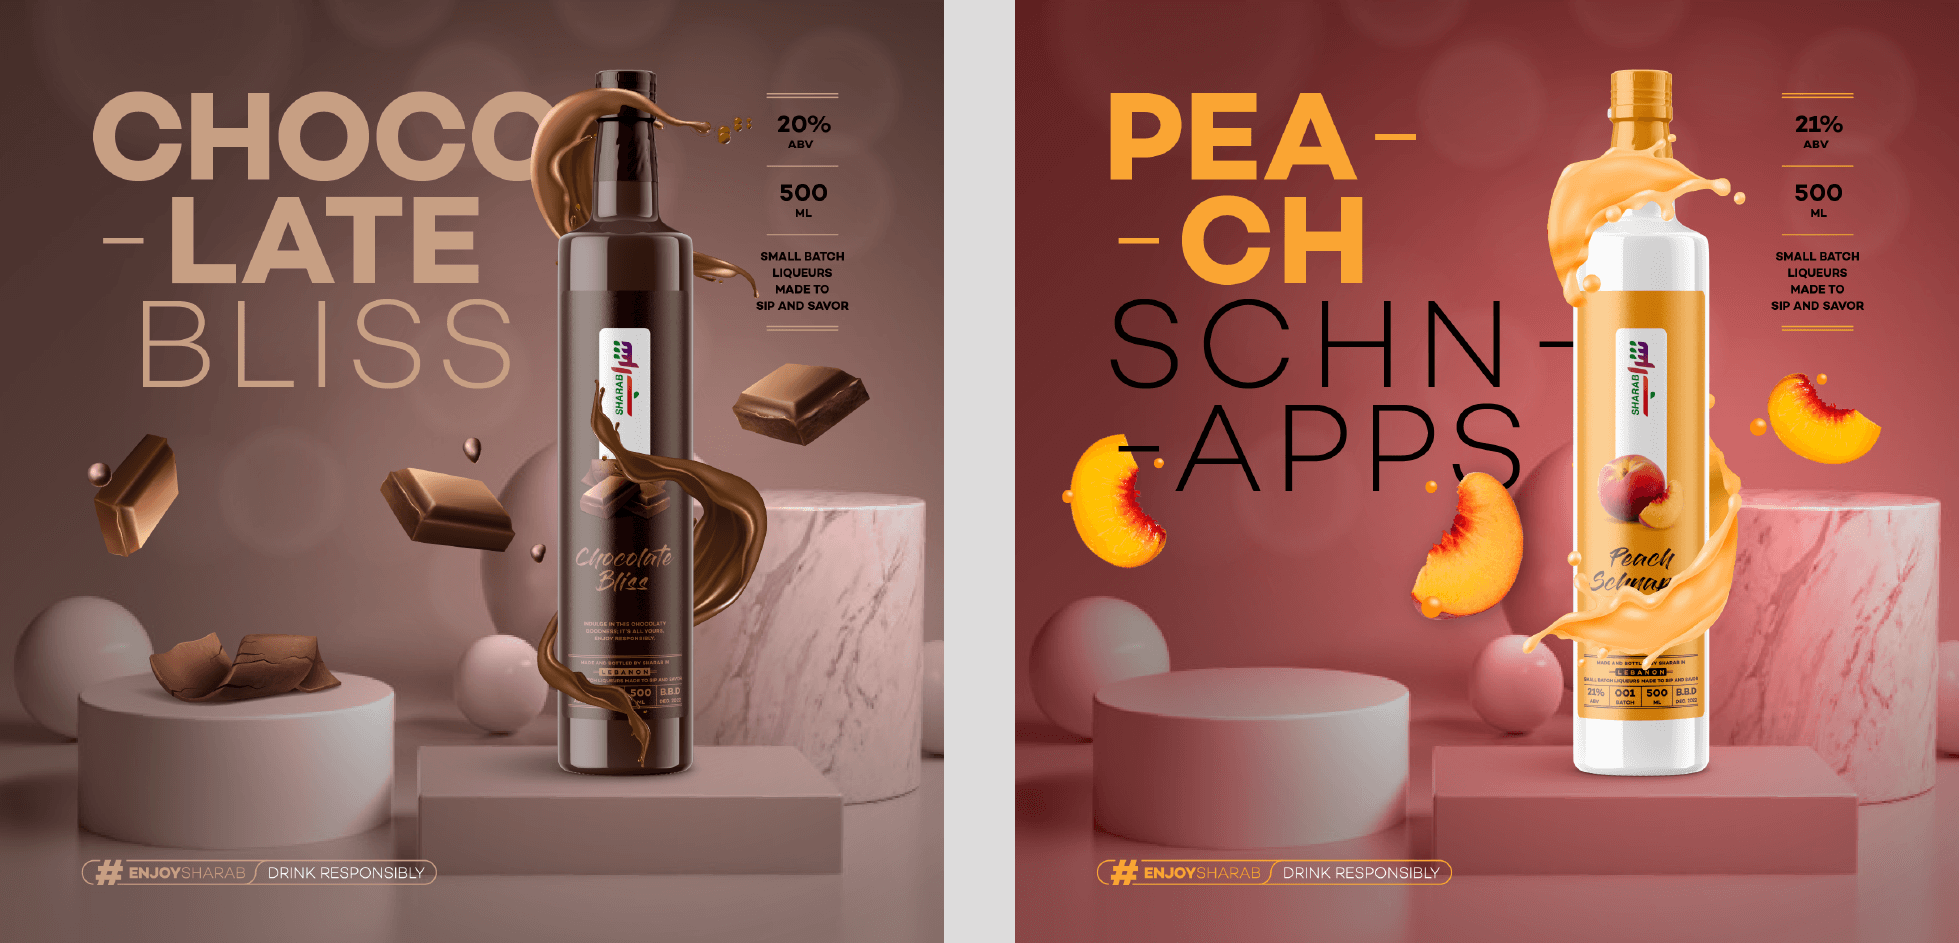 sharab_social-media-posts_chocolate-bliss-peach-schnapps